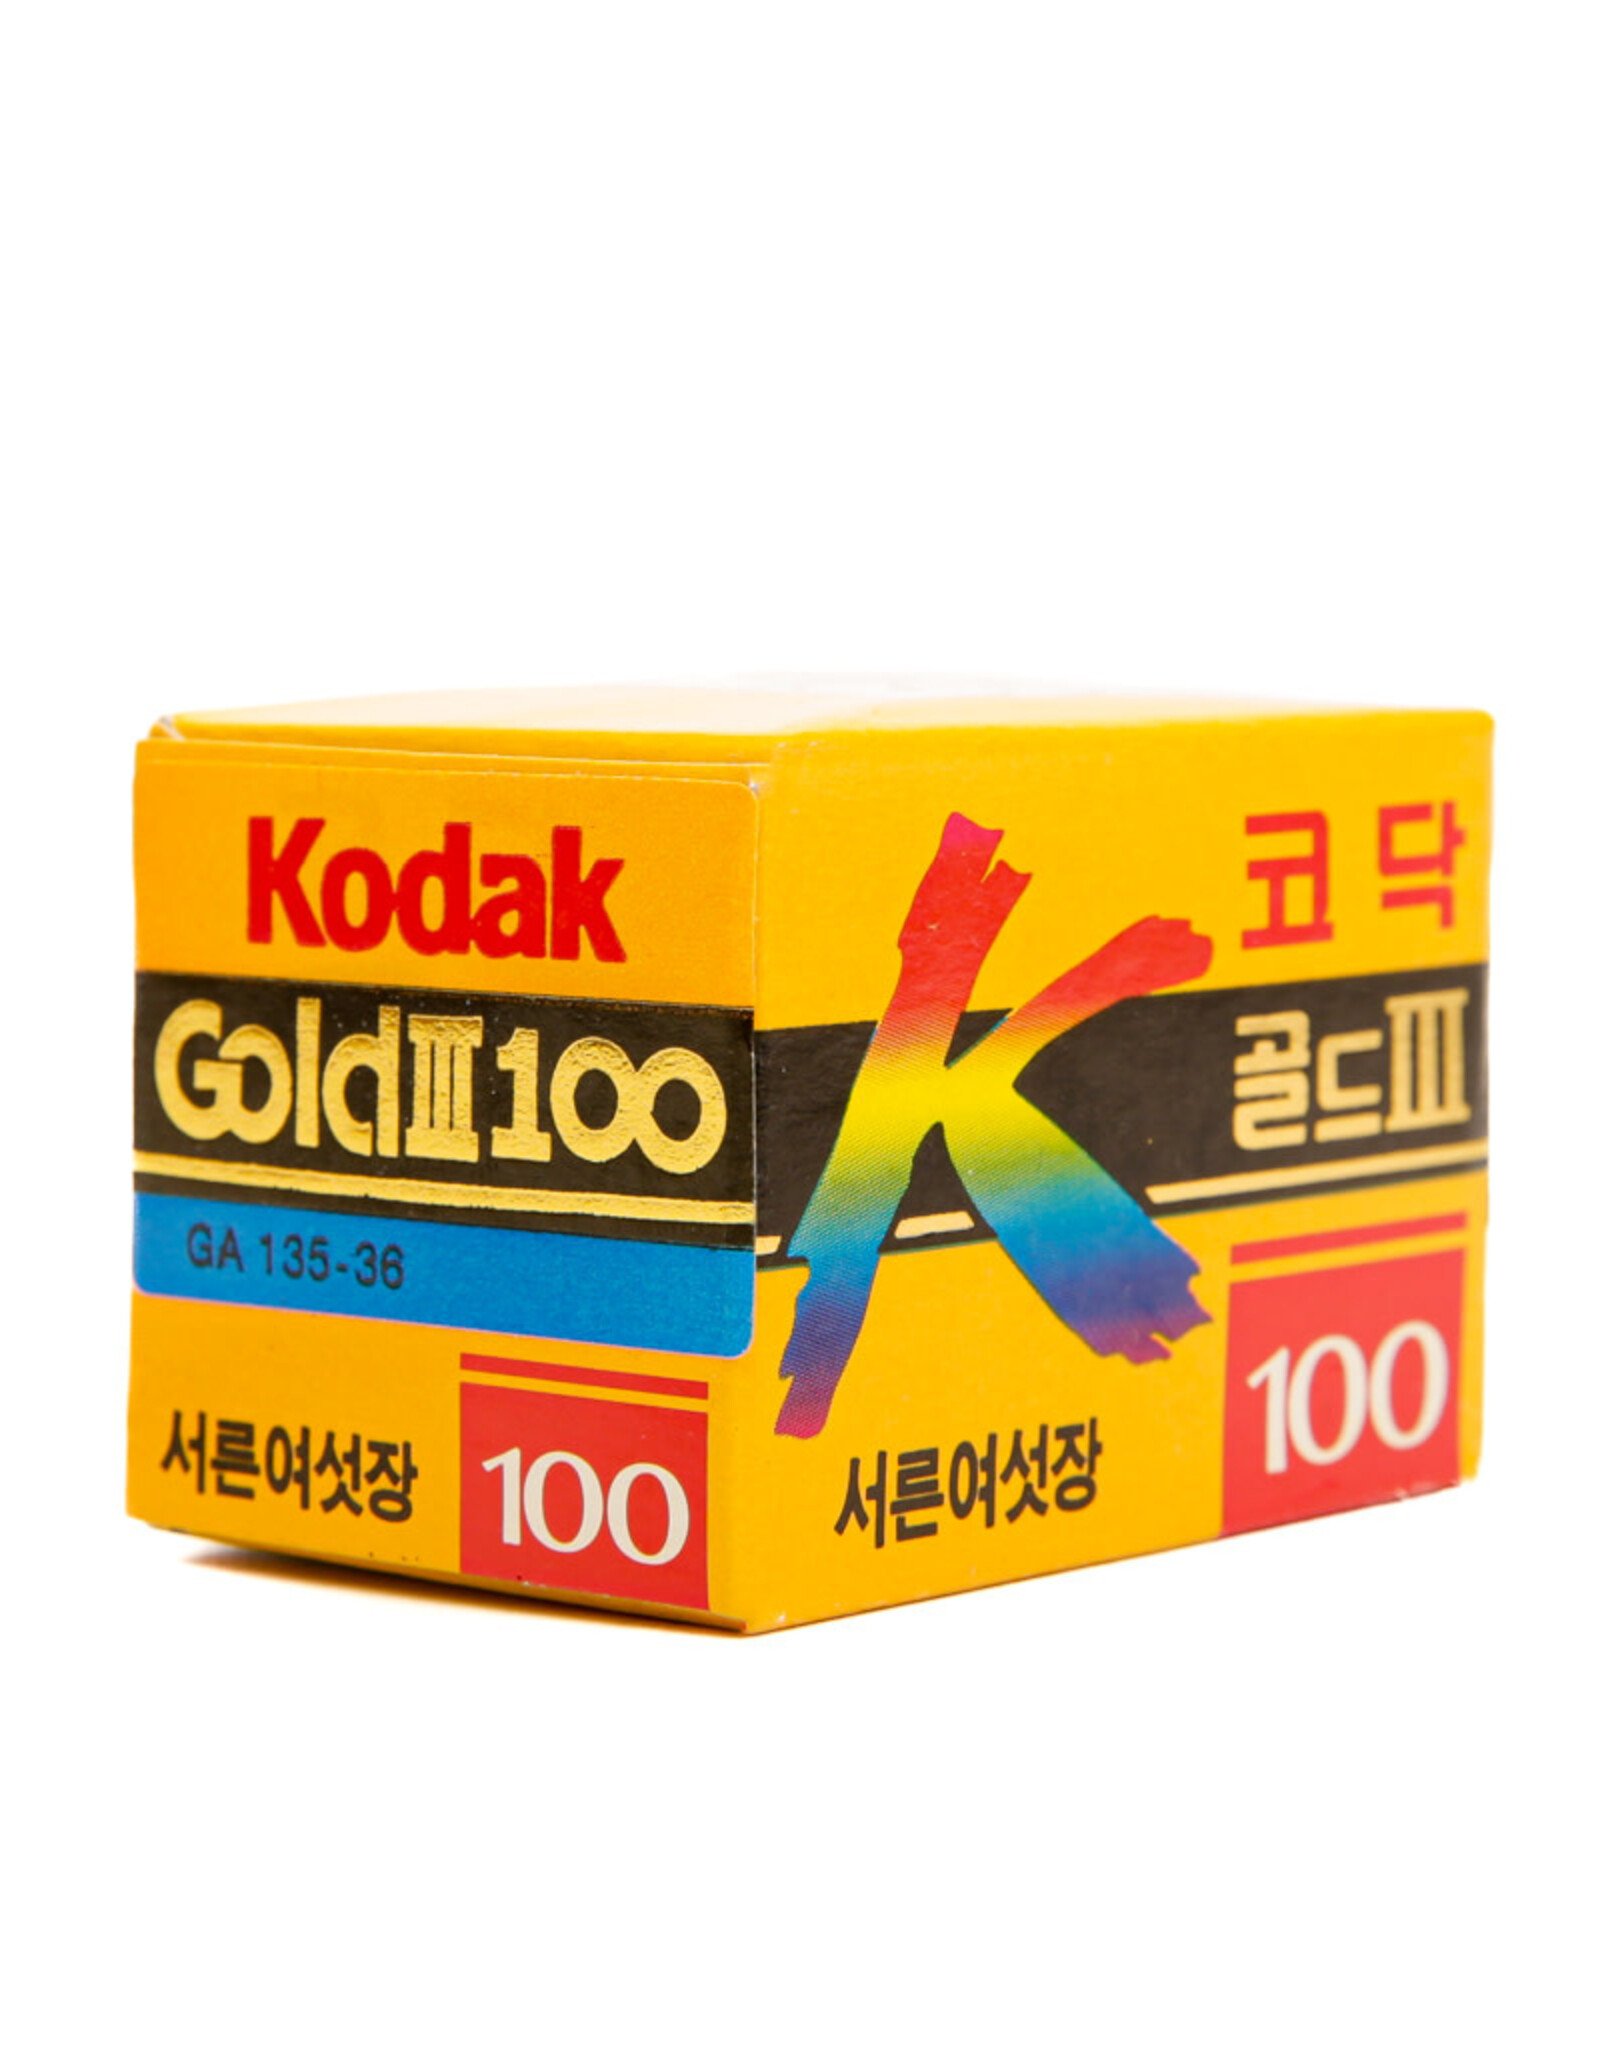 Kodak Kodak Gold III 100 Film 36 Exposures Australian Expired